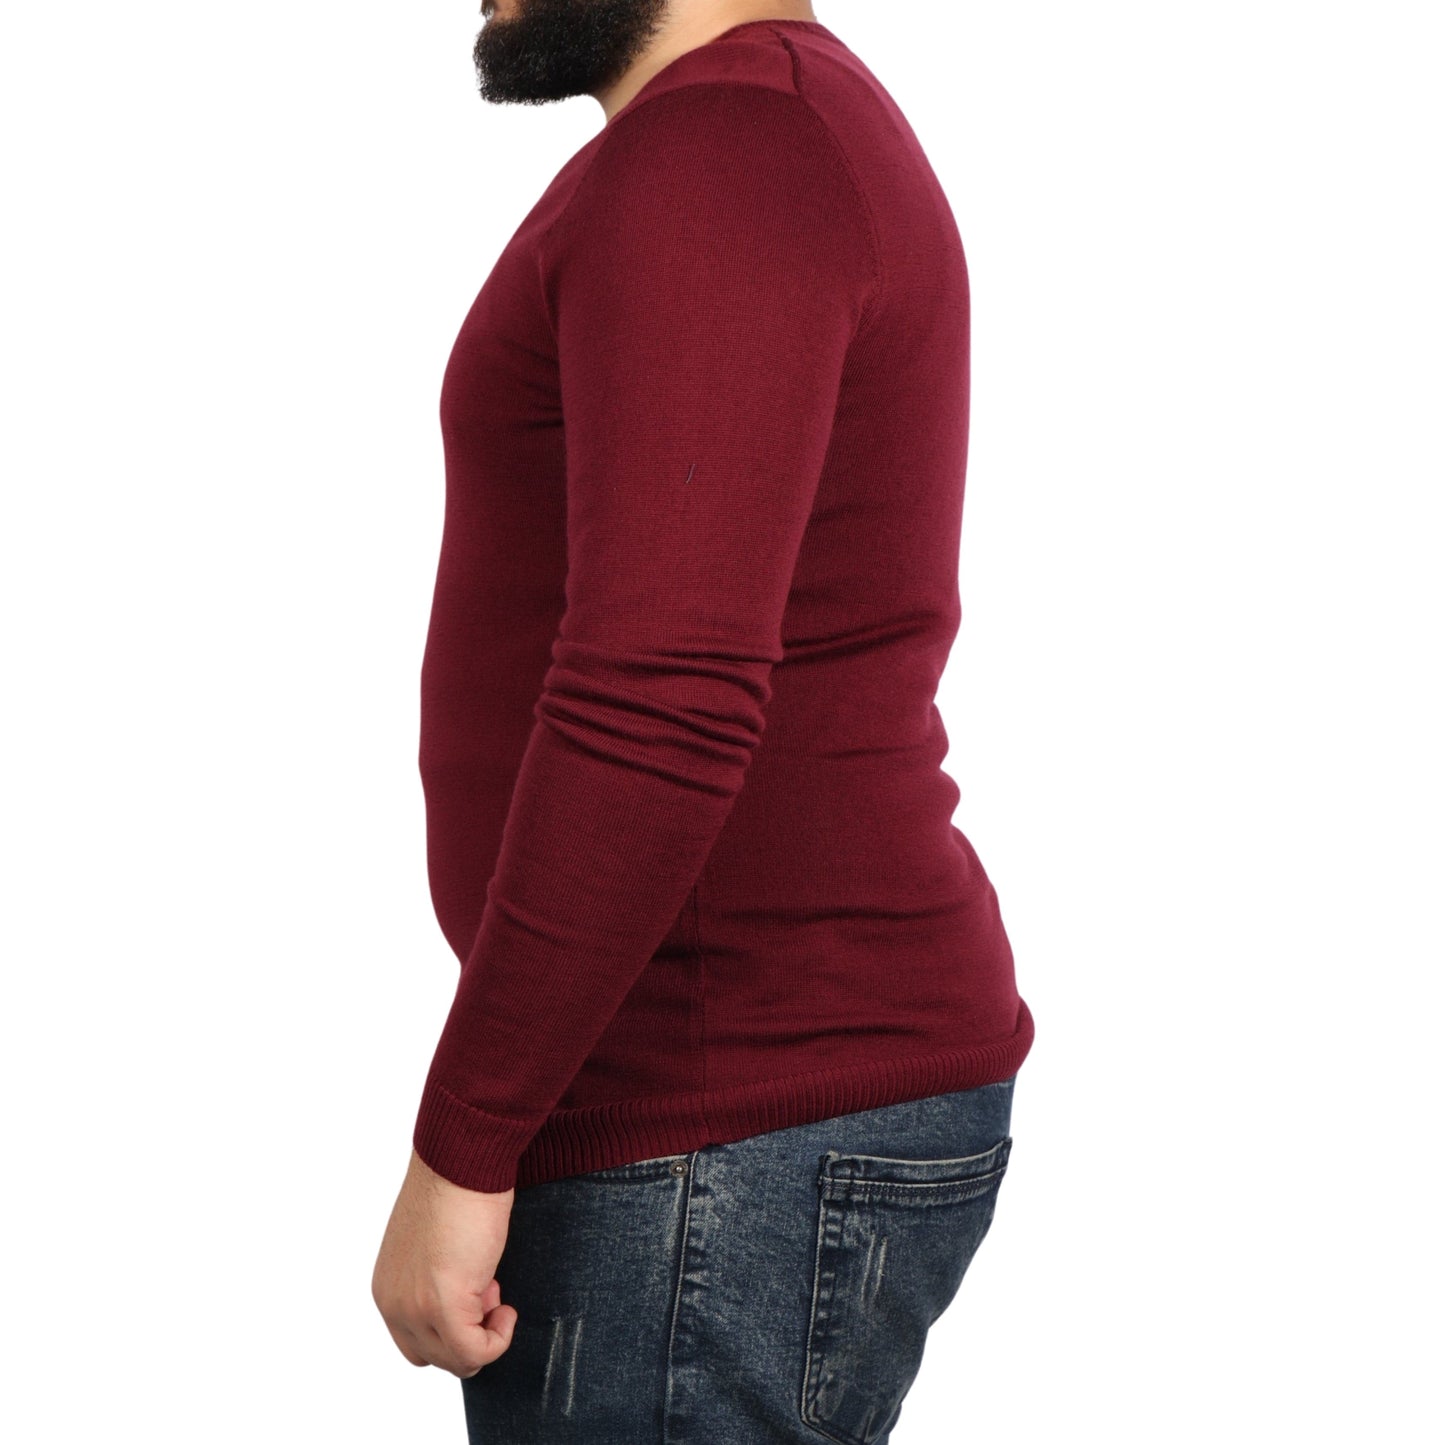 ASOS Mens Tops XL / Burgundy ASOS - Solid Crew Neck Sweater